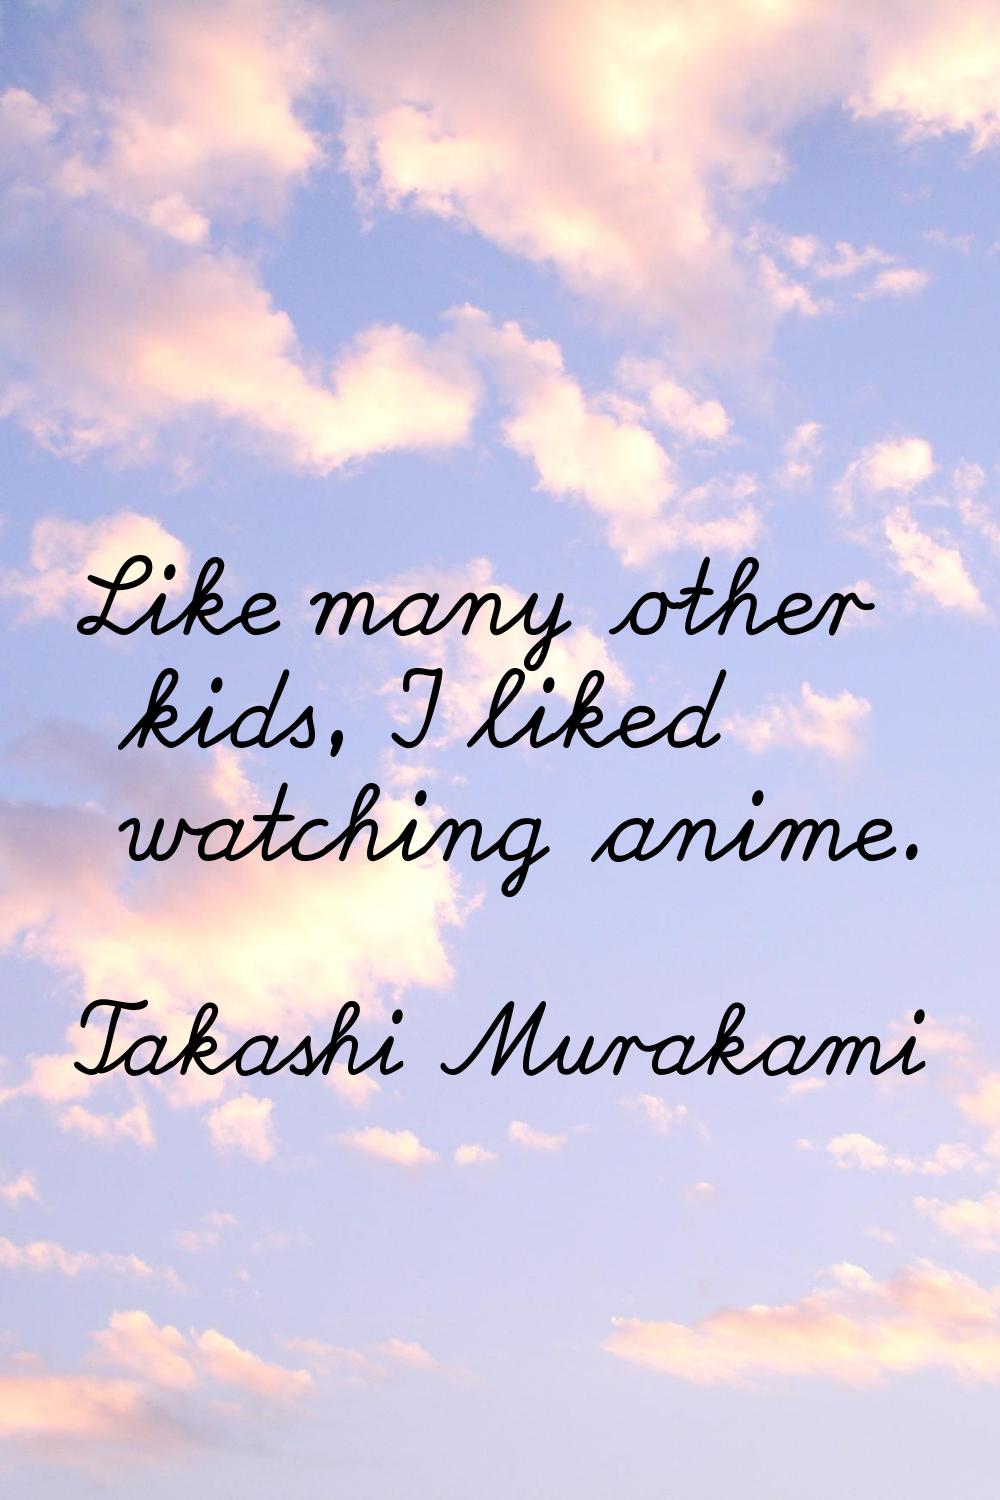 Like many other kids, I liked watching anime.